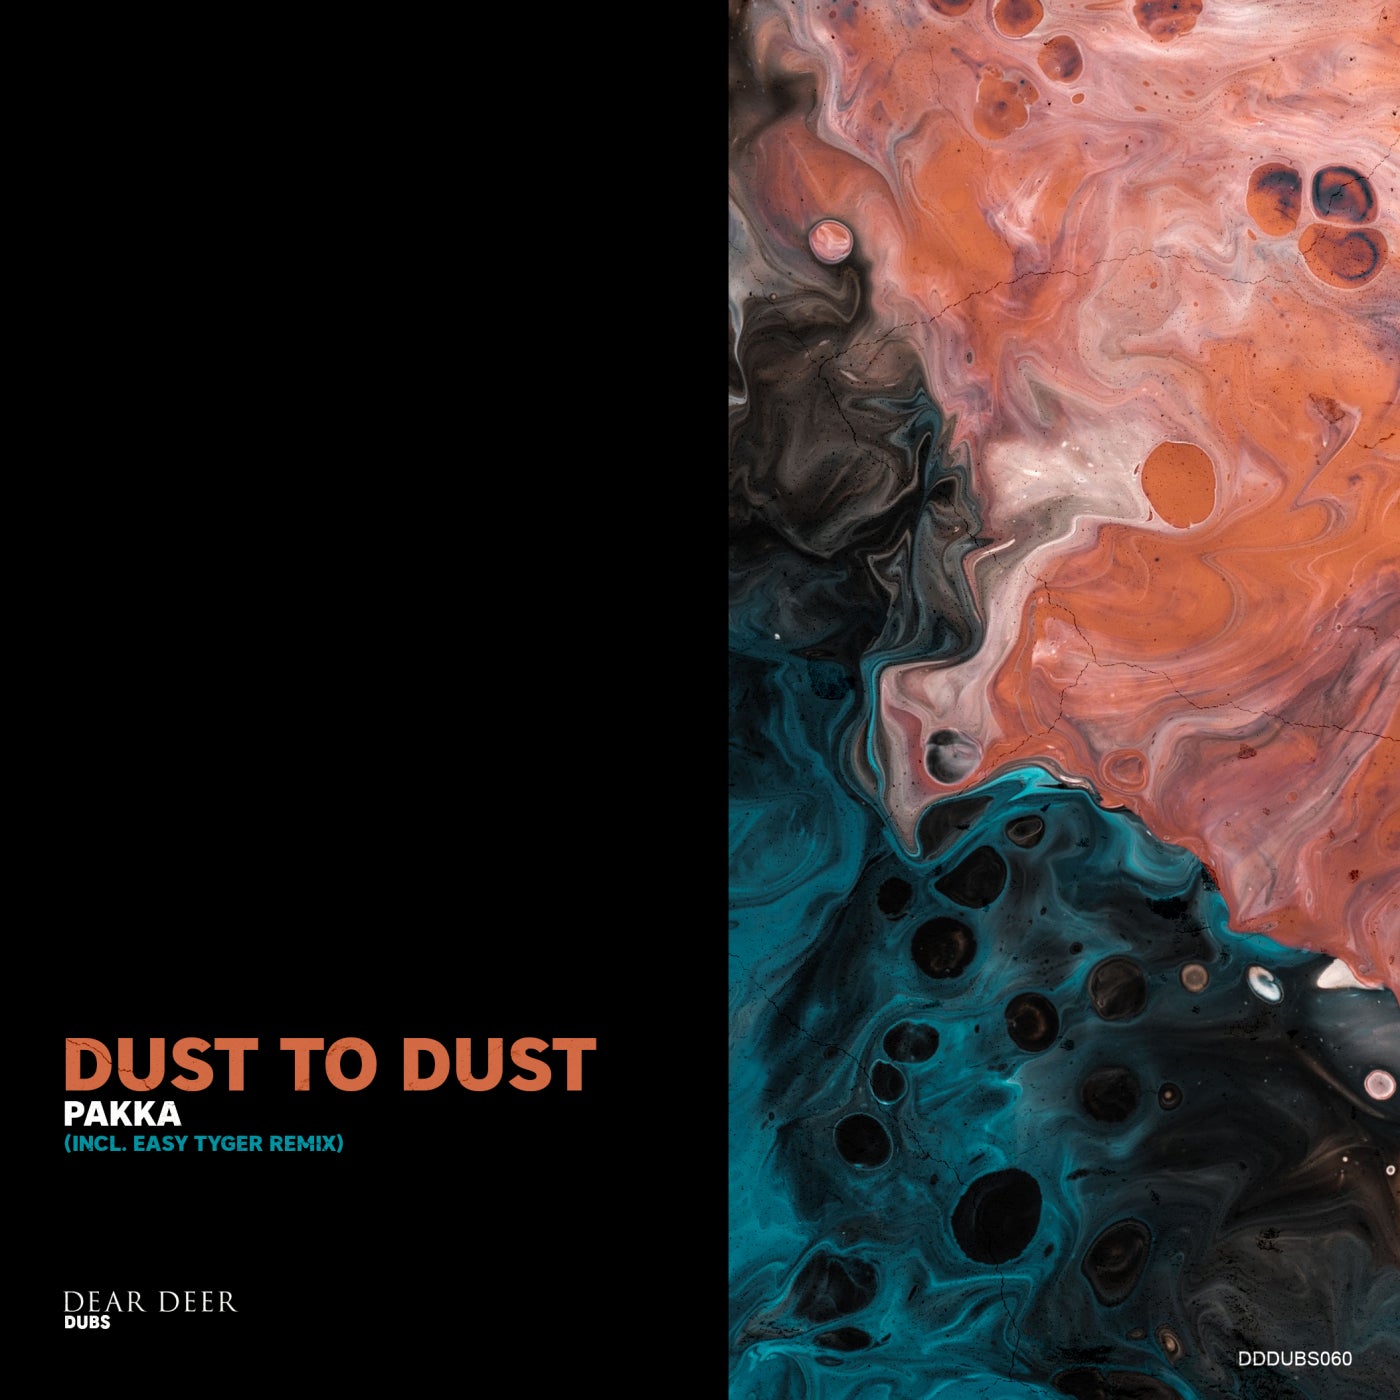 Pakka – Dust To Dust [DDDUBS060]